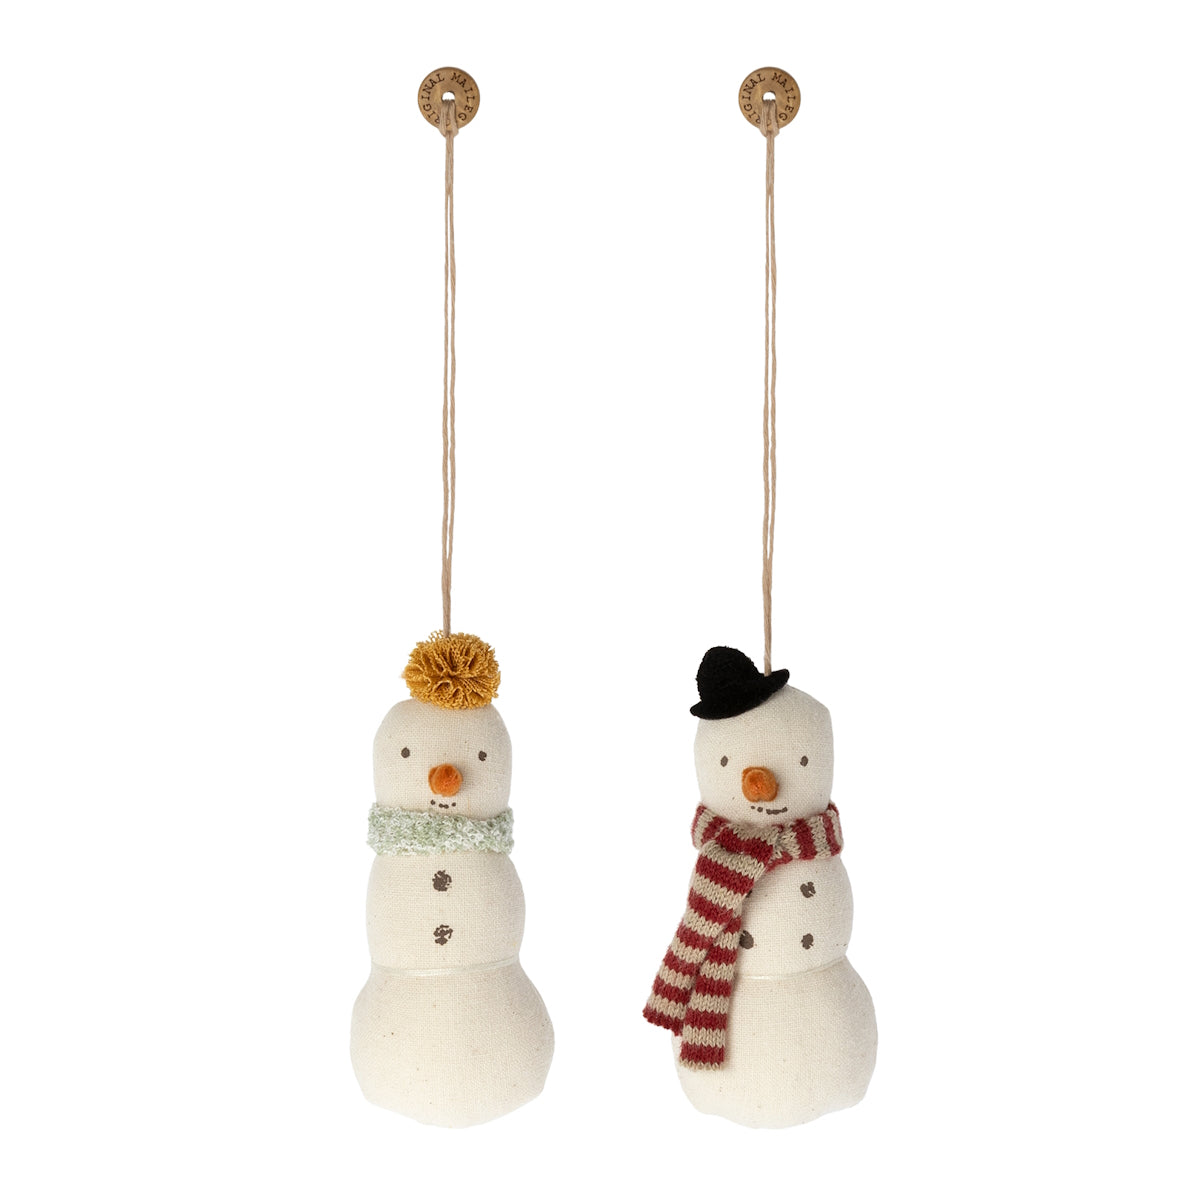 Snowman Ornaments in Suitcase | Maileg Design | Miss Arthur | Home Goods | Tasmania